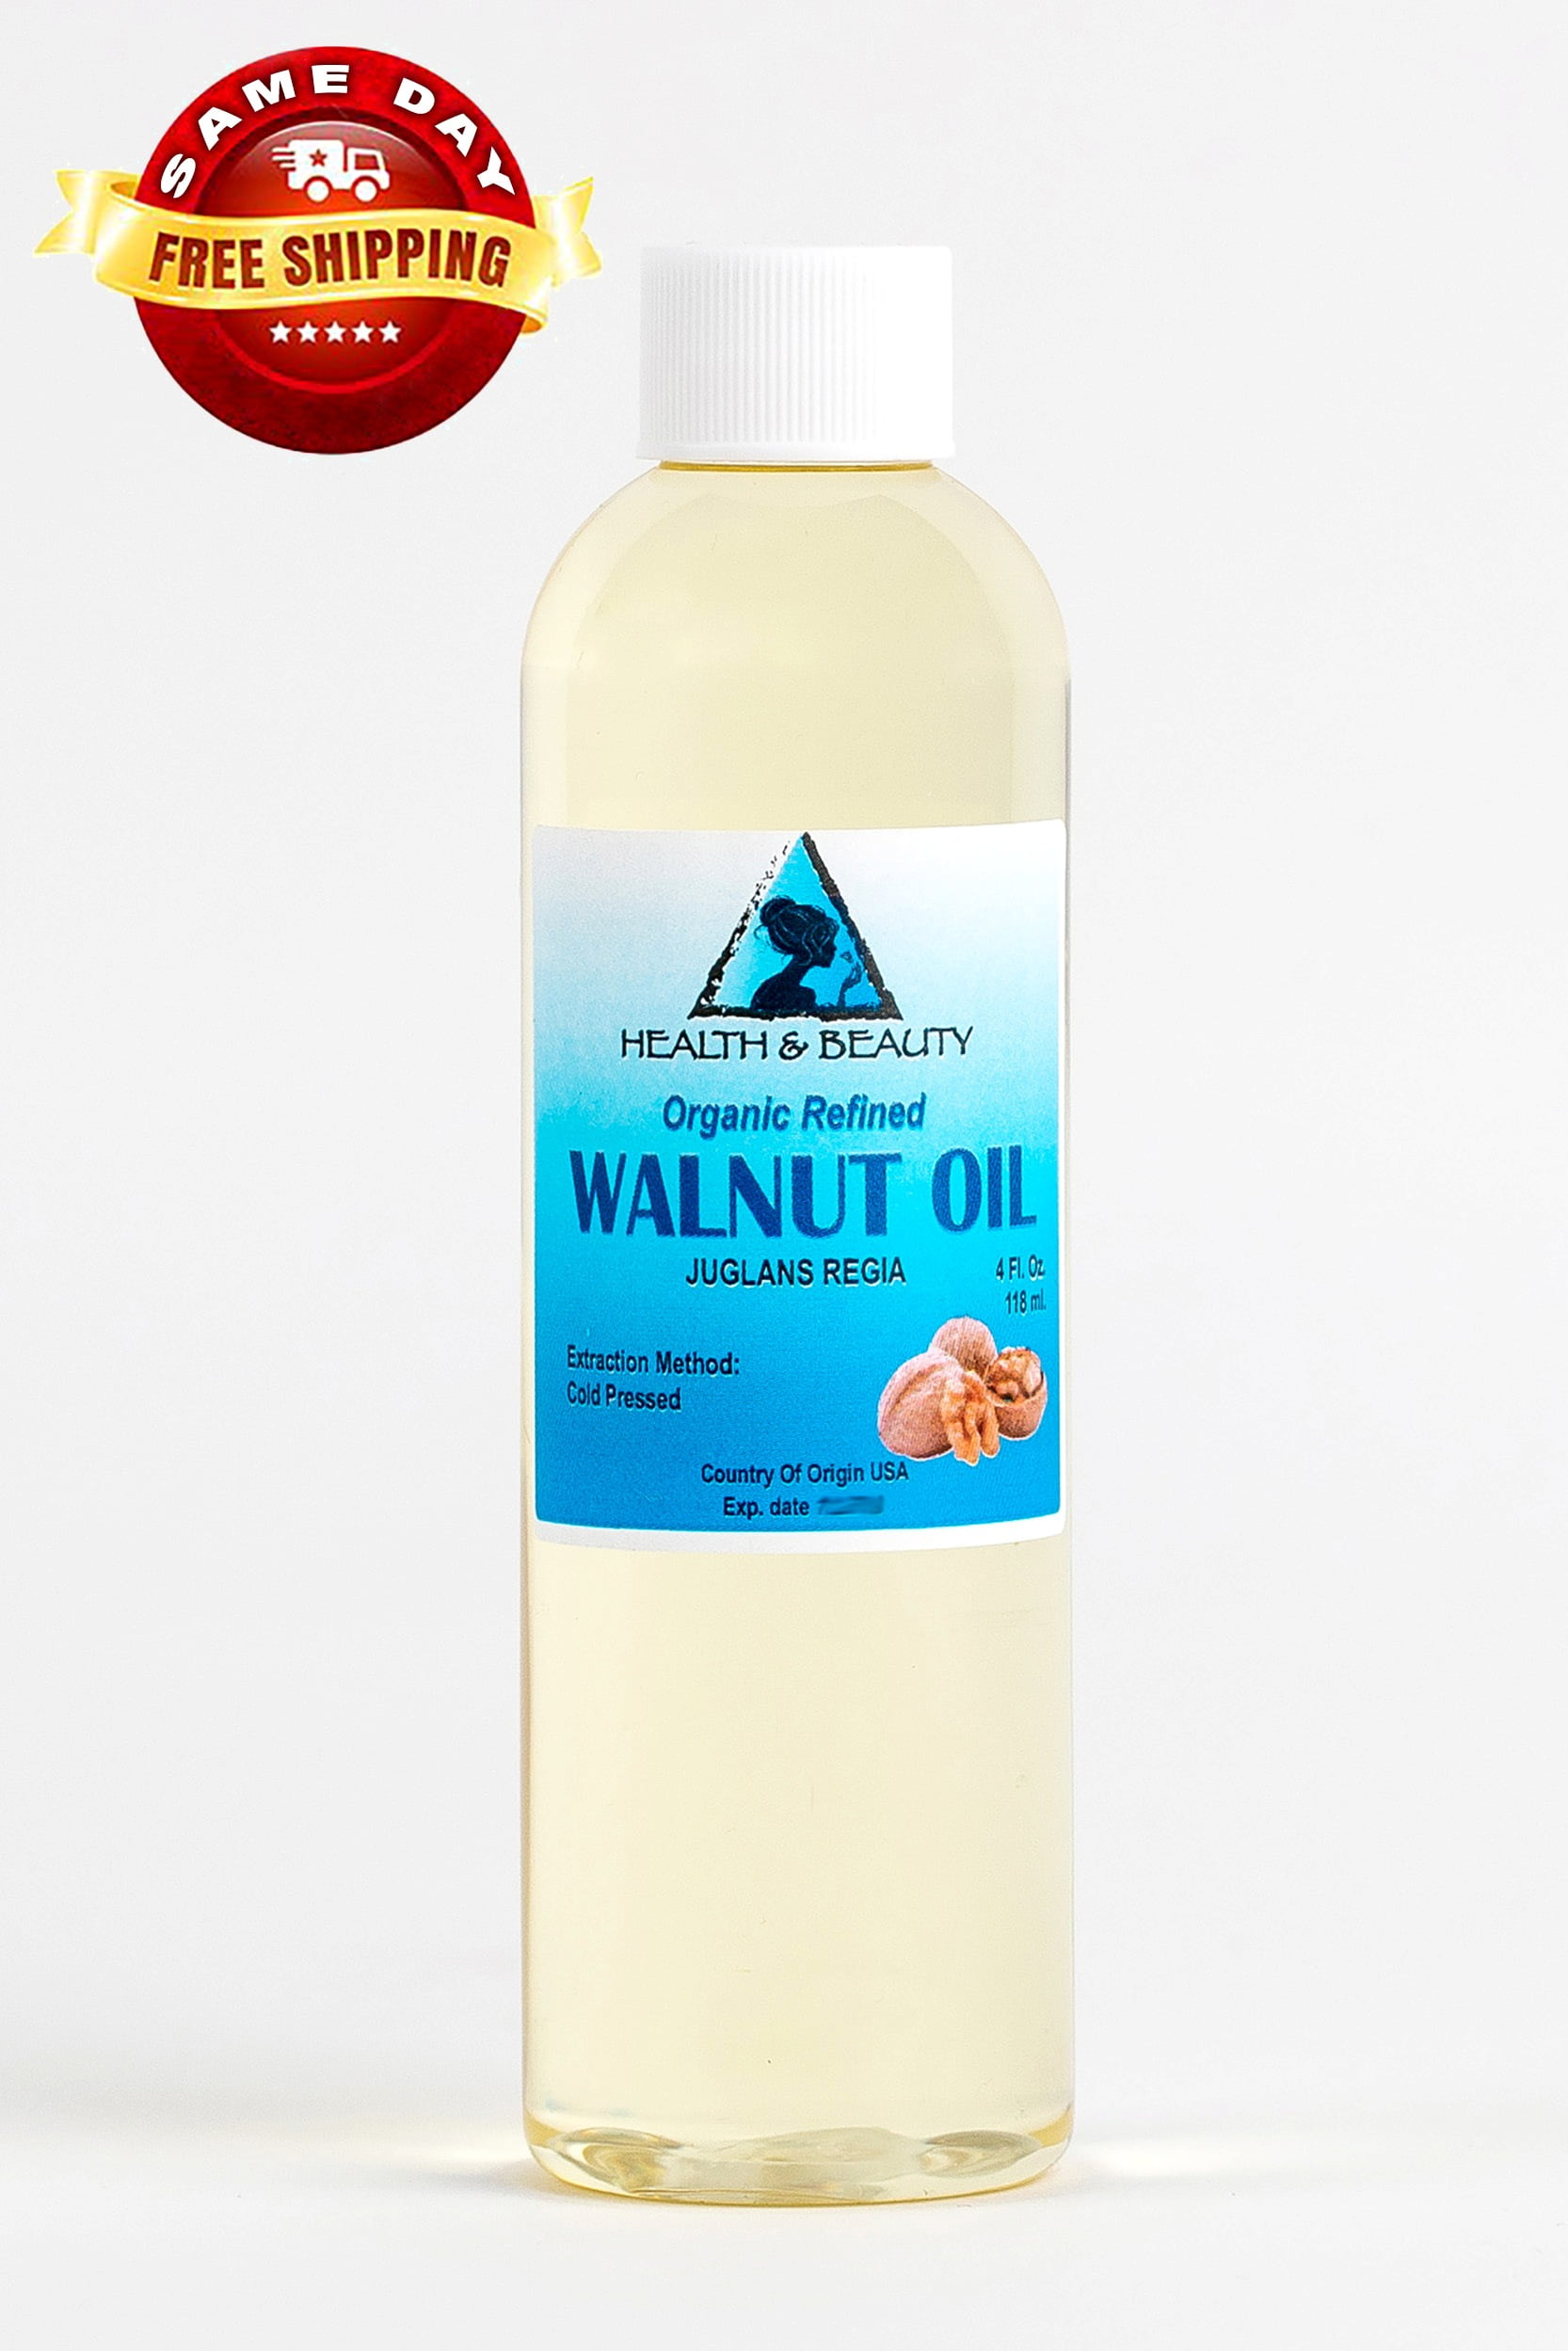 Cold-pressed Walnut Oil